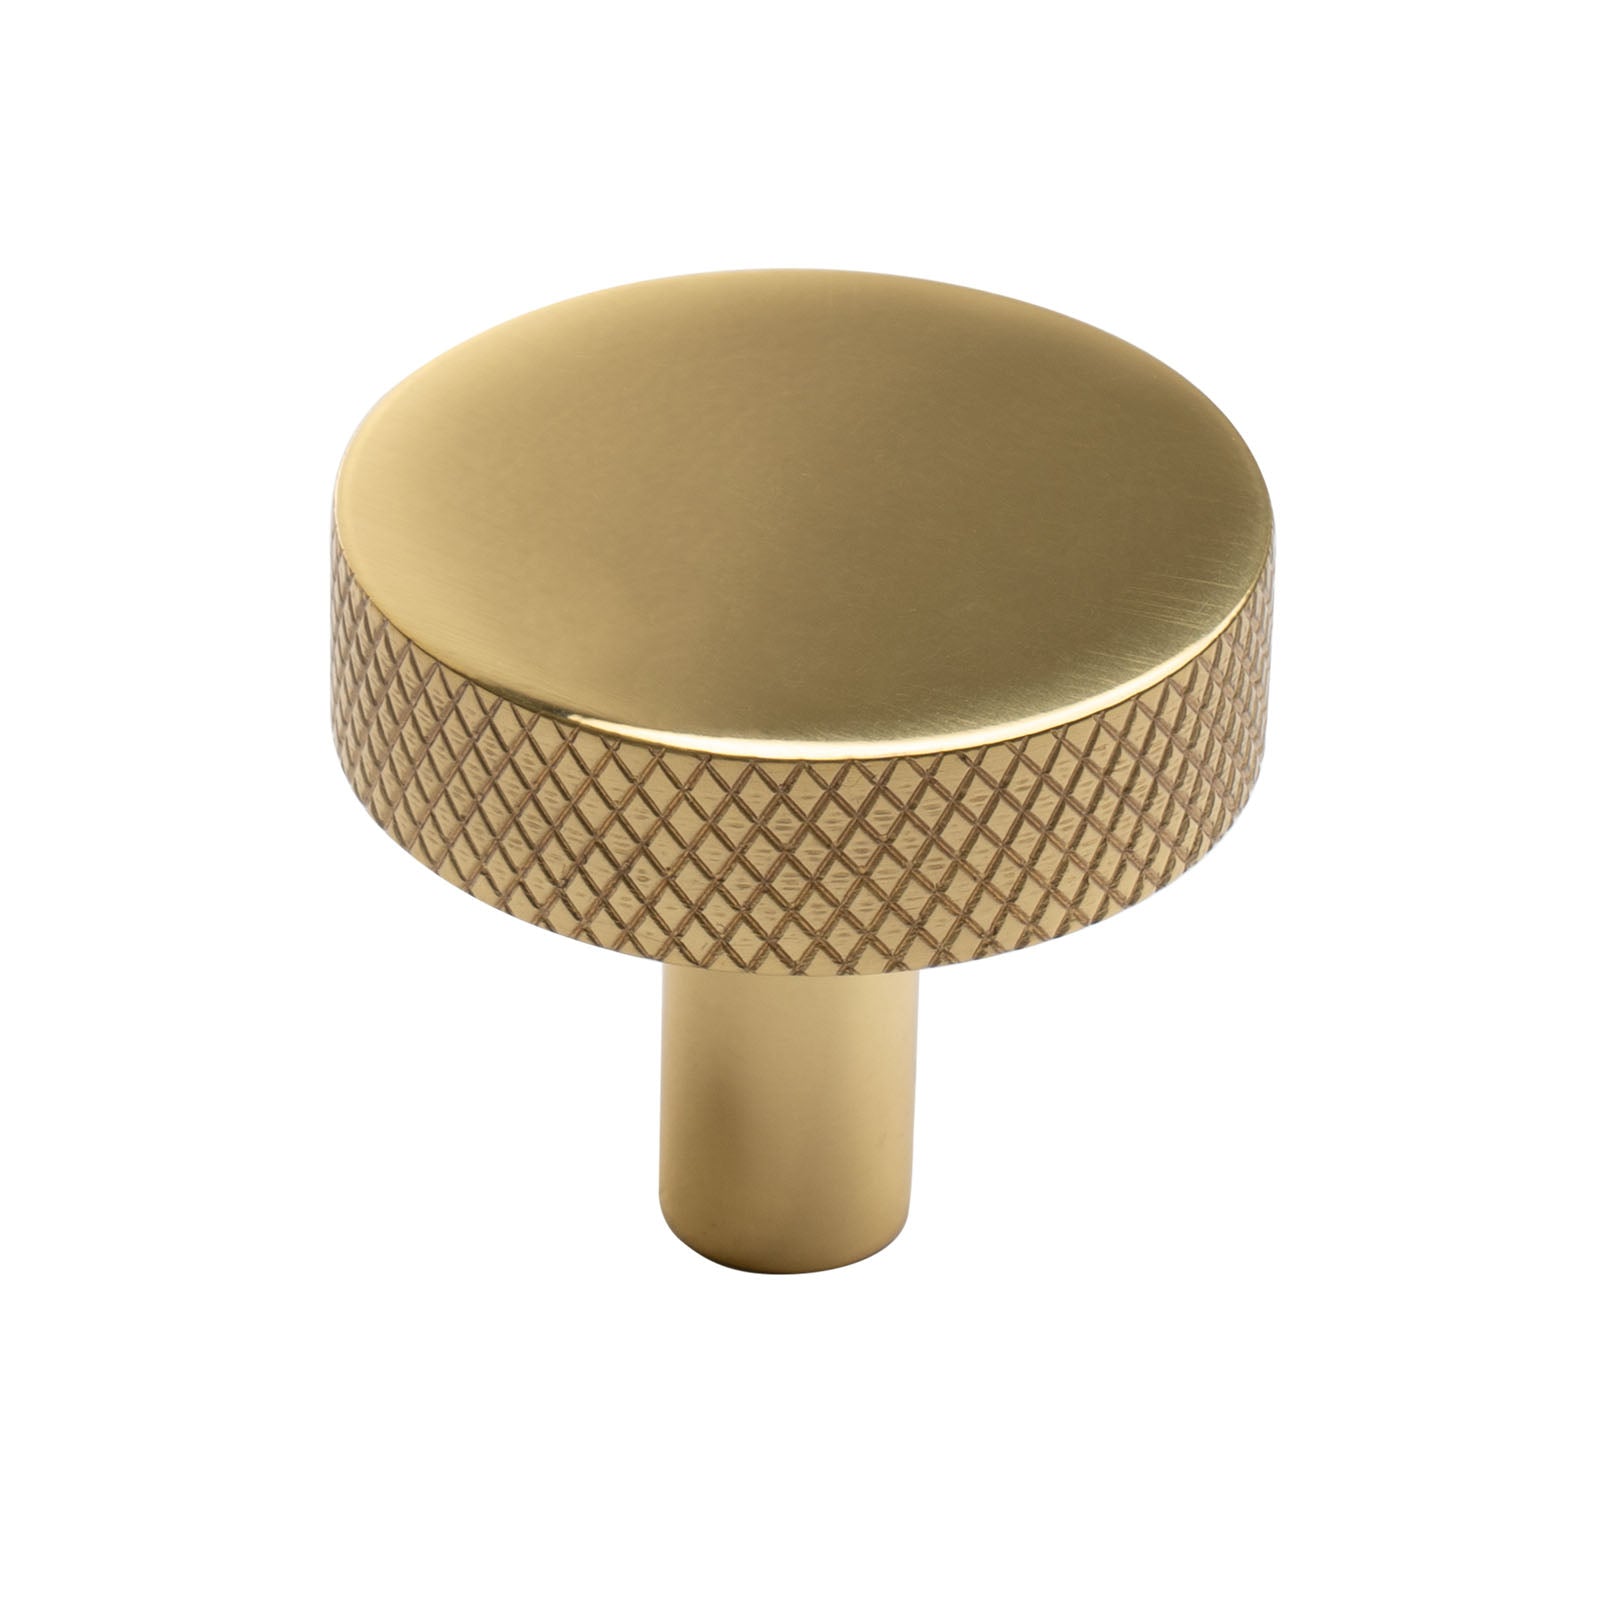 brass drawer knob with knurled pattern SHOW